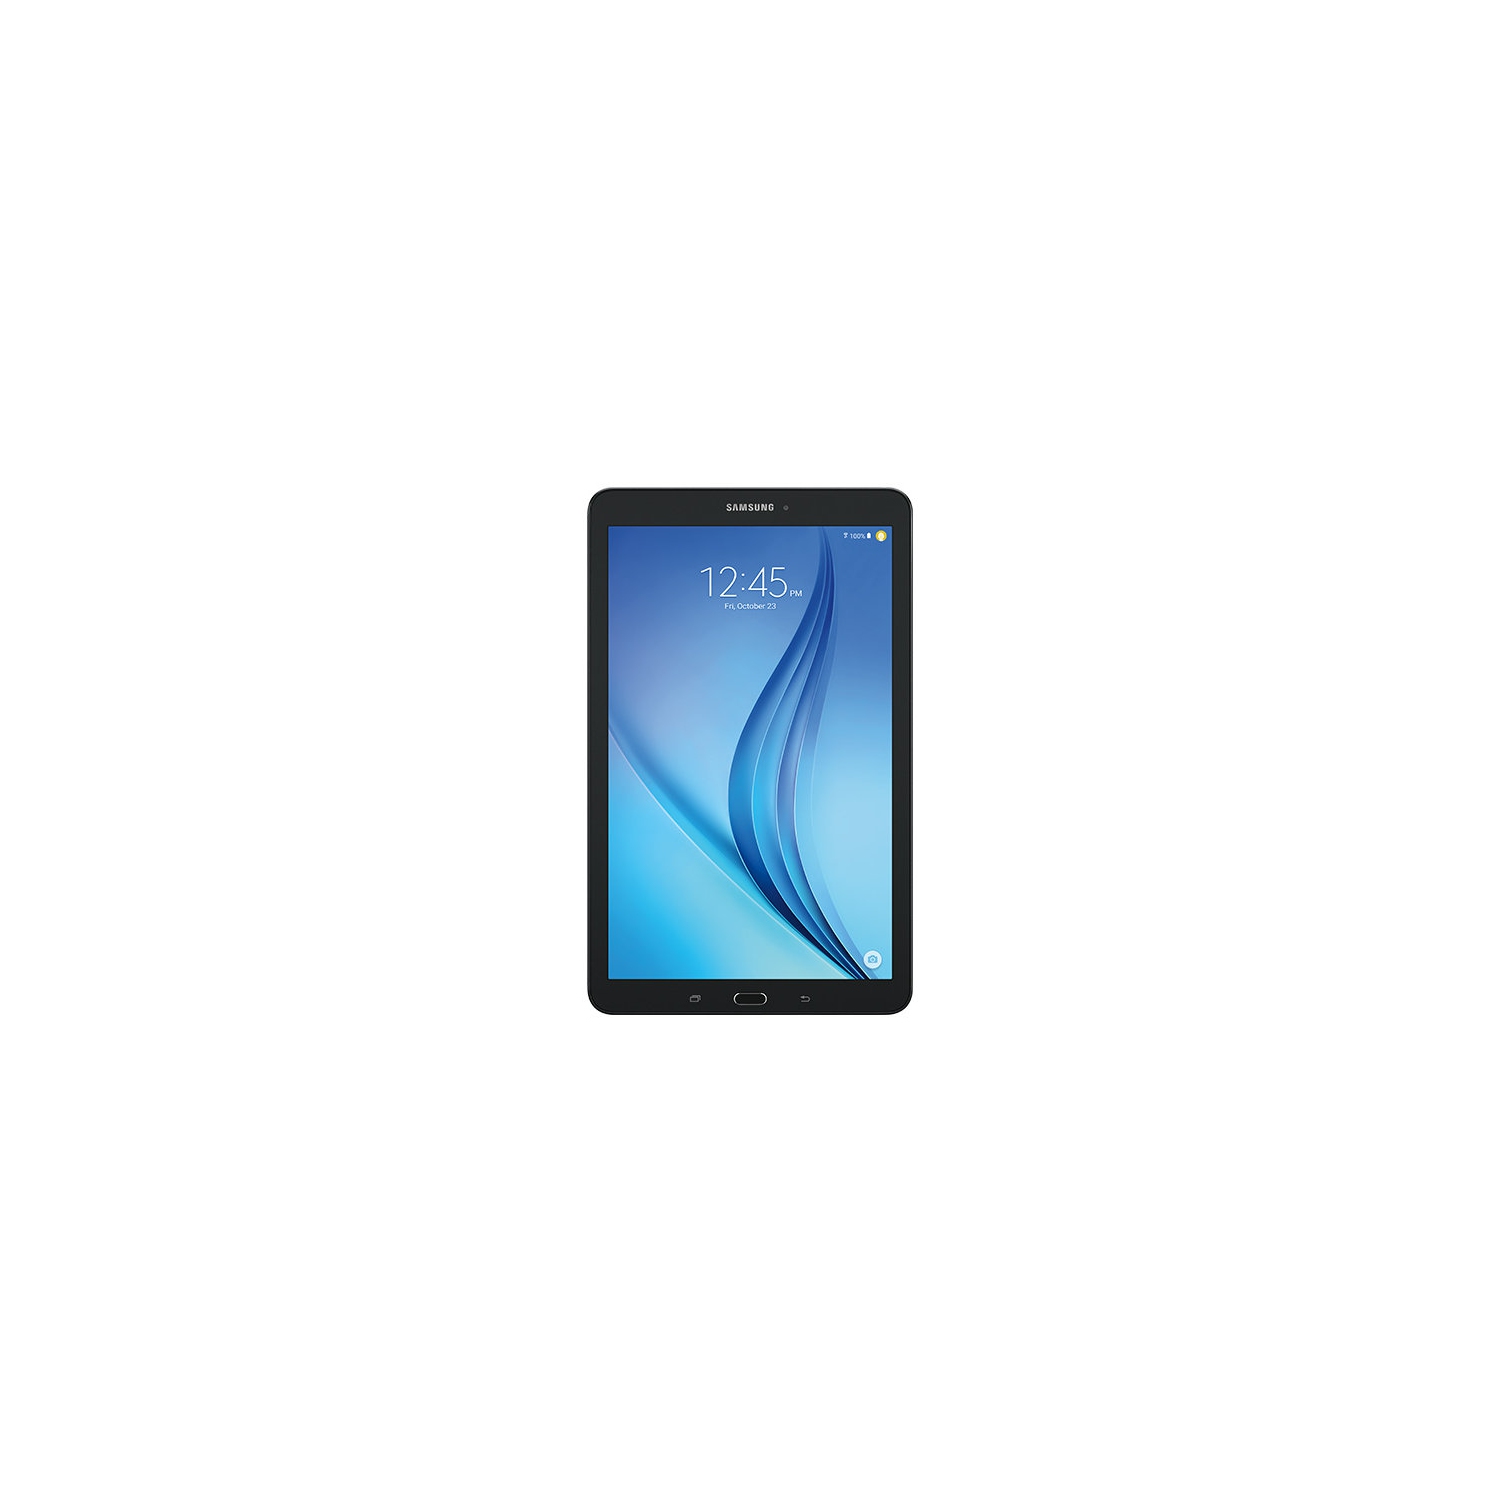 Refurbished (Good) - Samsung Galaxy Tab E SM-T560NU 9.6" 16GB Black Android Tablet